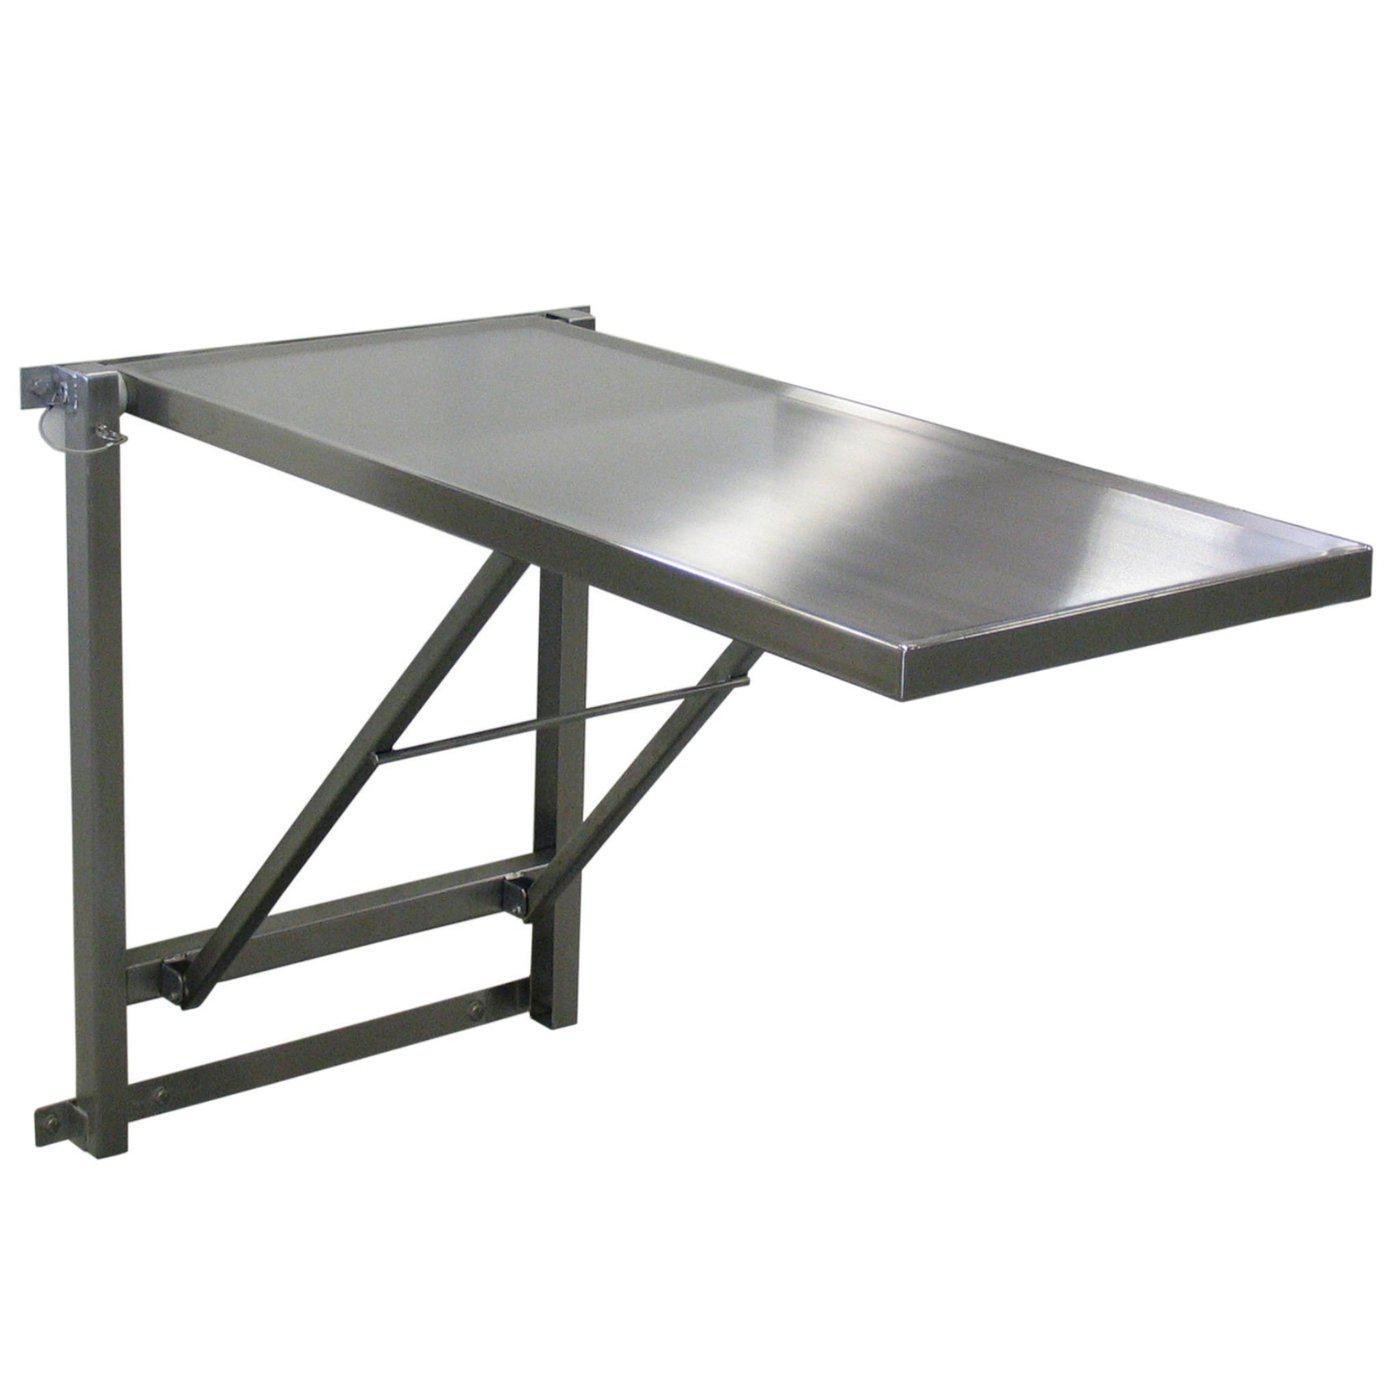 Folding exam table mortech manufacturing company inc